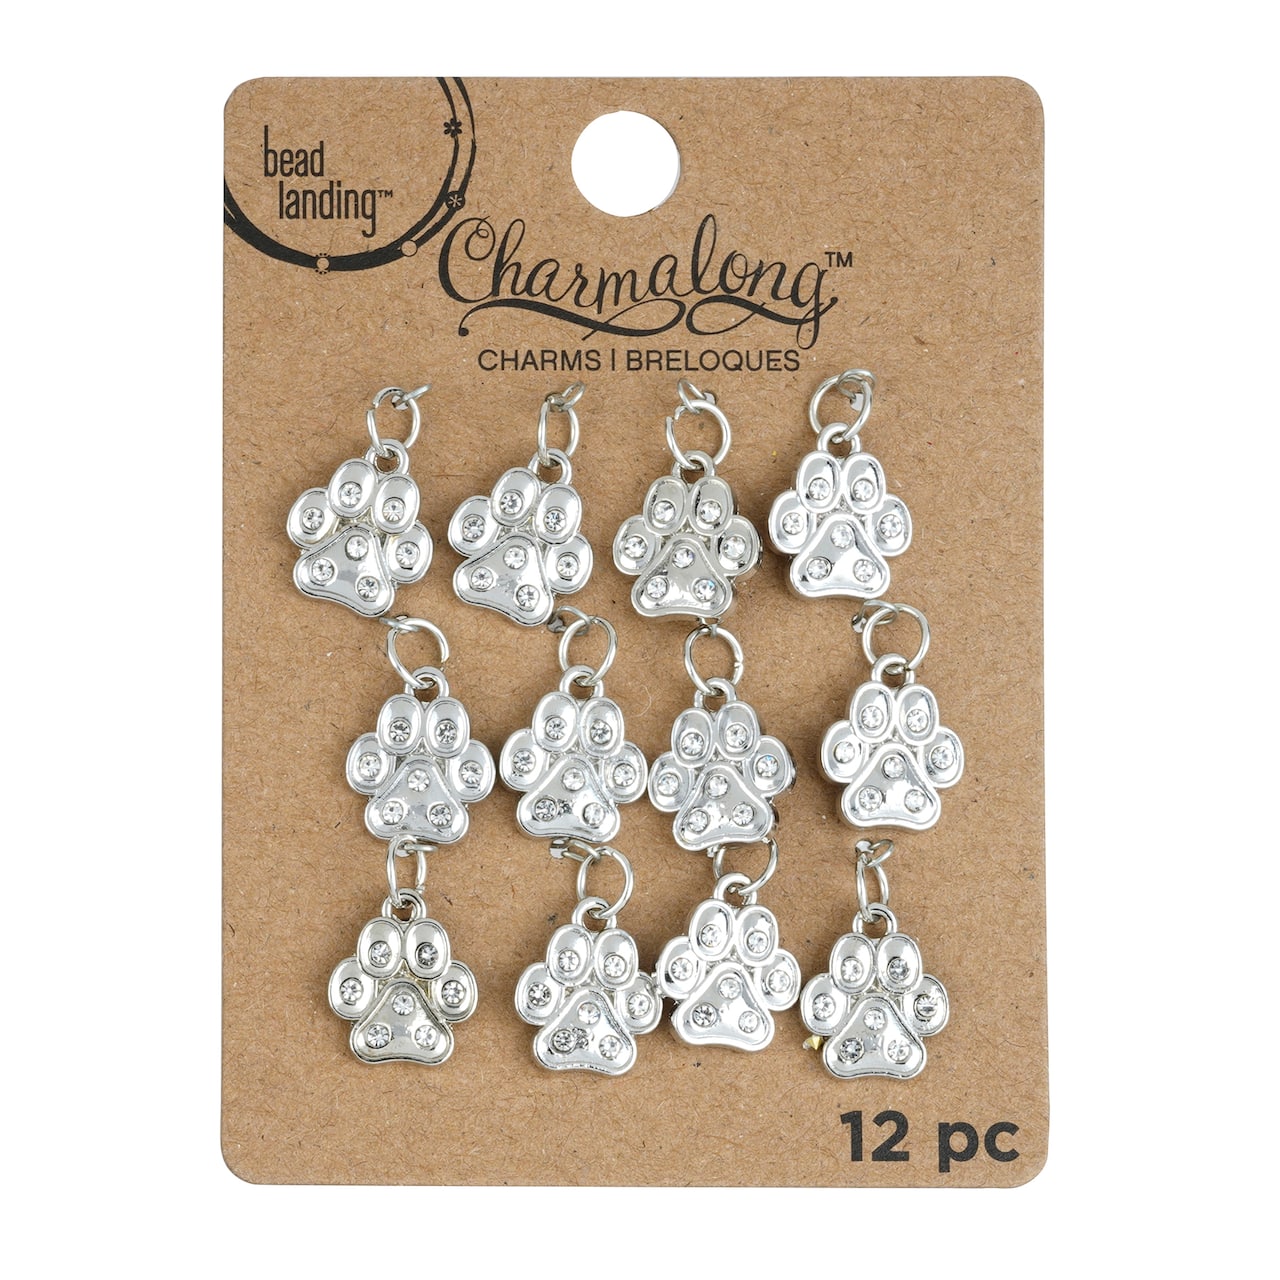 Charmalong&#x2122; Rhodium Paw Charms by Bead Landing&#x2122;